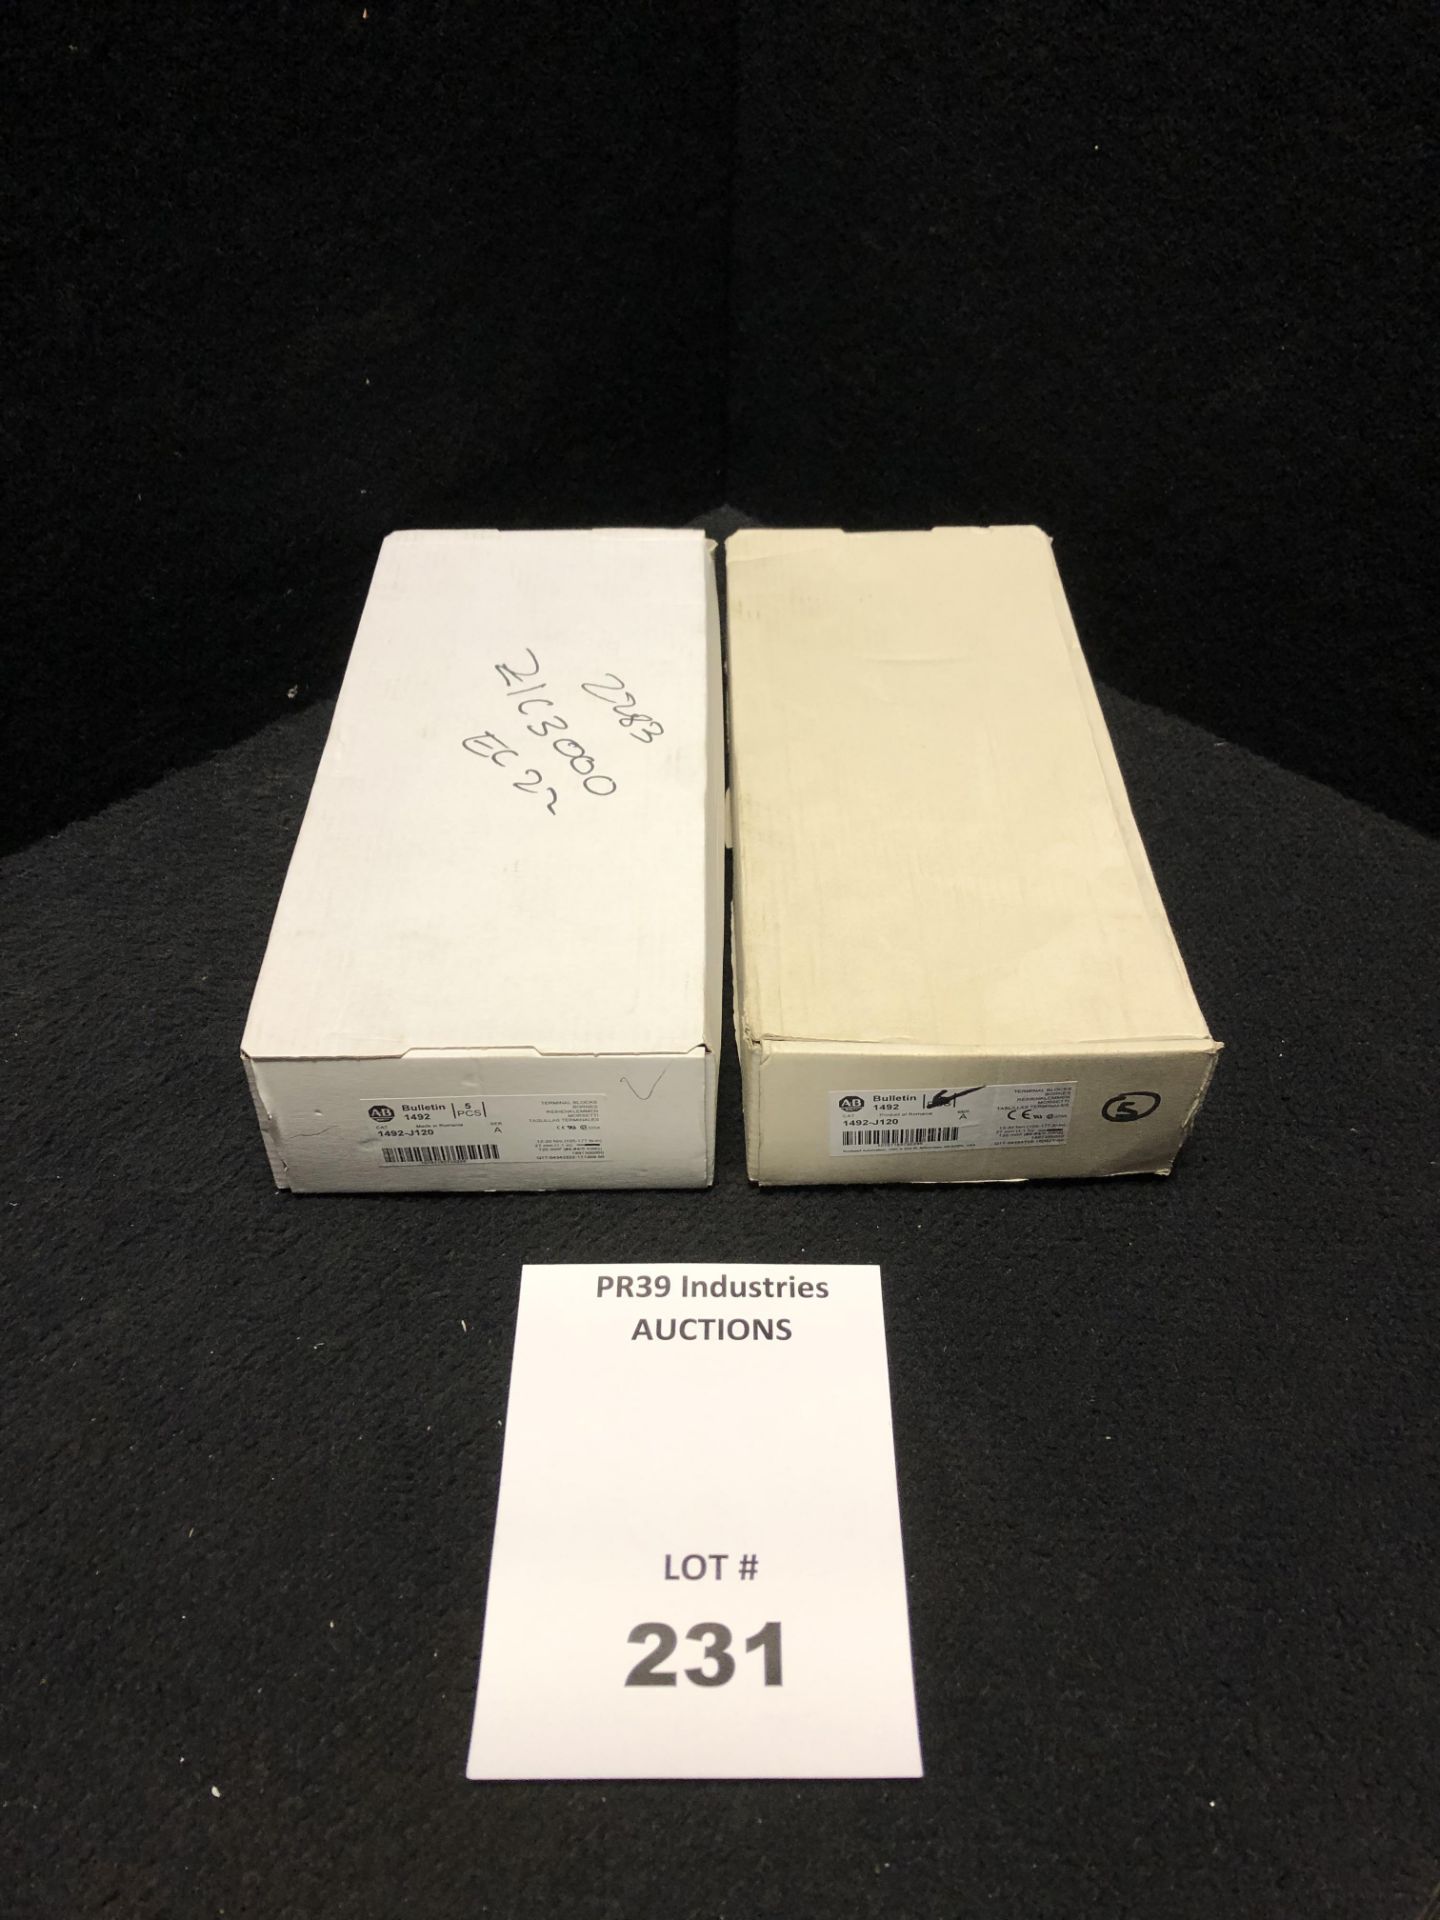 NEW IN BOX - LOT OF 2 - ALLEN BRADLEY 1492-J120 TERMINAL BLOCKS (5CT)